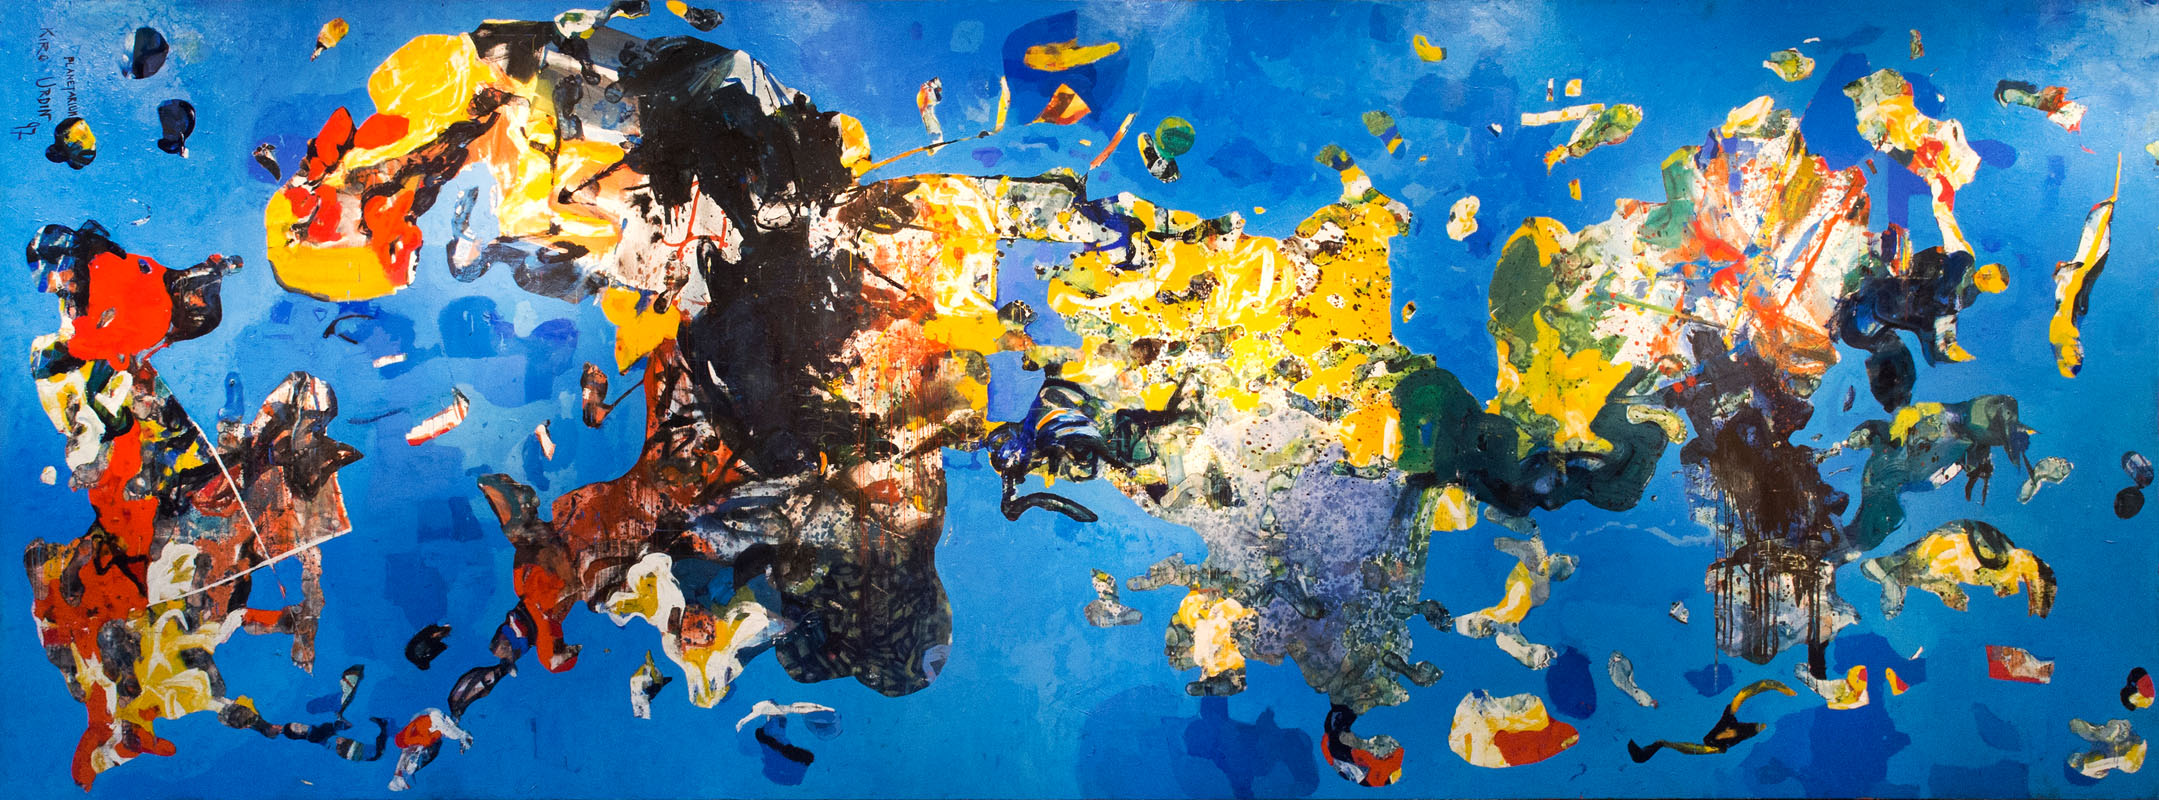 Kiro Urdin (MK) – Planetarium | 1996 – 1997 | acrylic on canvas | 800 x 290 cm